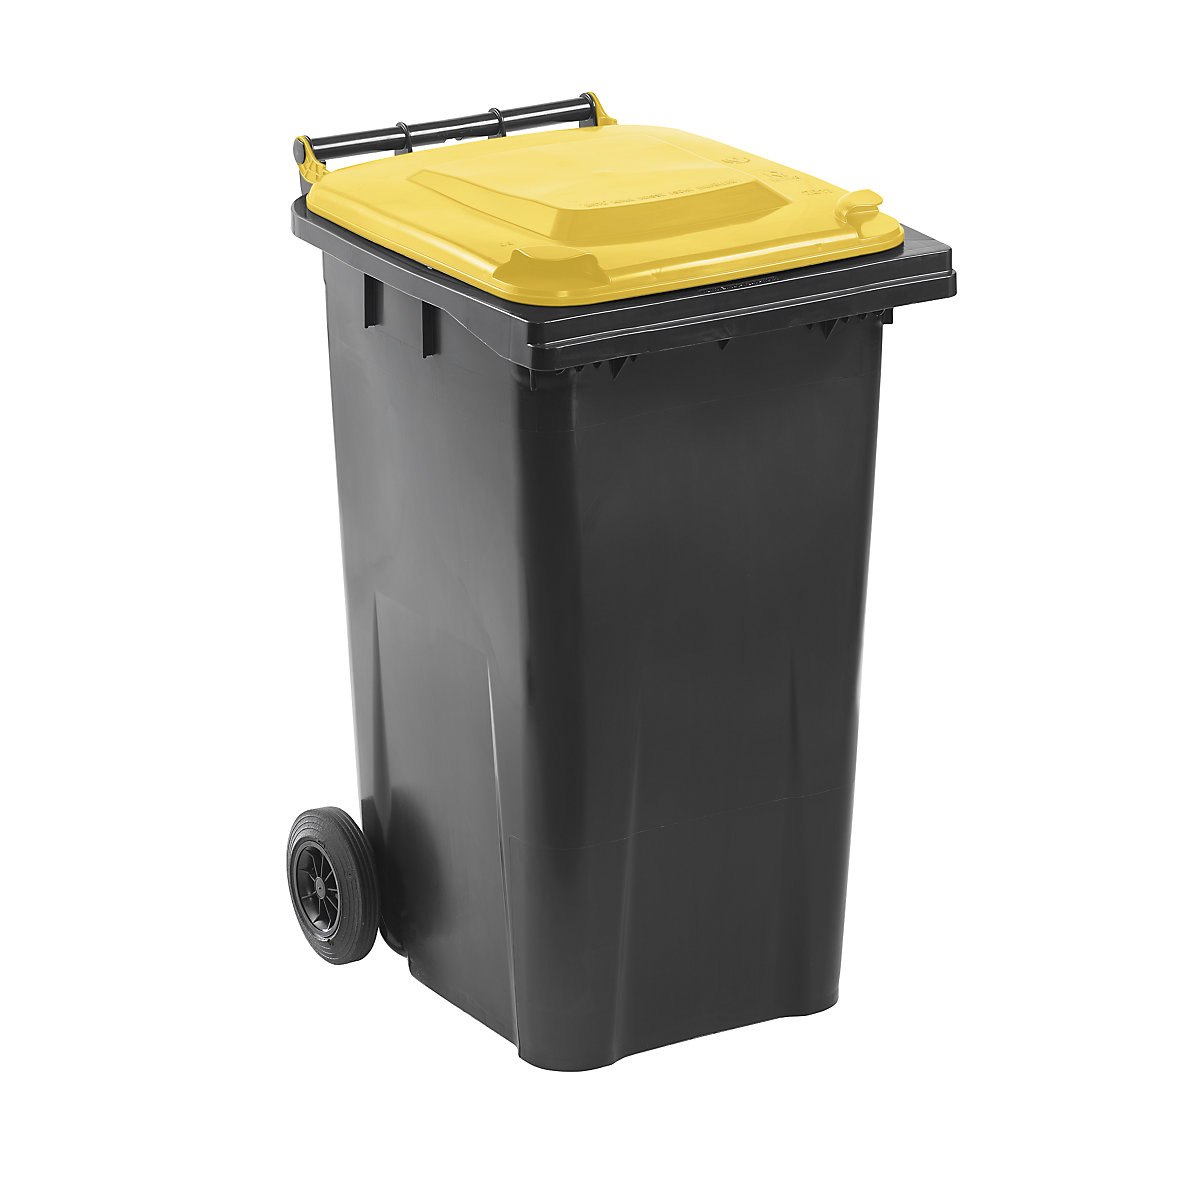 Contentor de lixo conforme a norma DIN EN 840, capacidade 240 l, LxAxP 580 x 1100 x 740 mm, antracite, tampa amarela